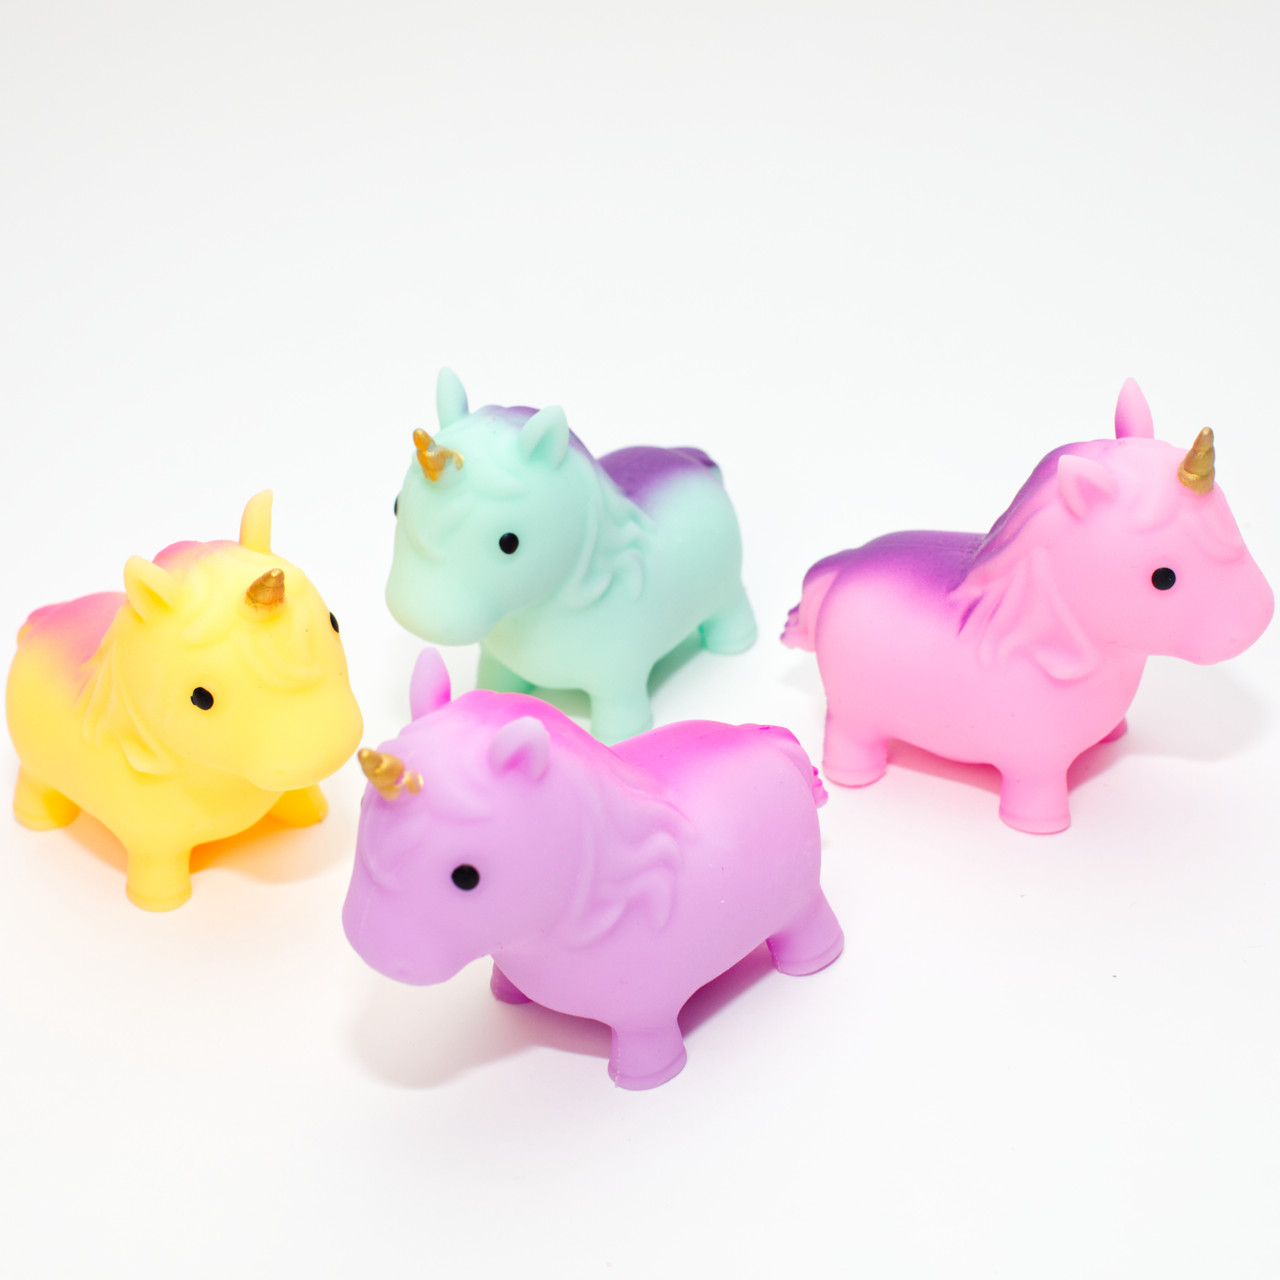 Squishy Unicorn - 12 pack - Toys